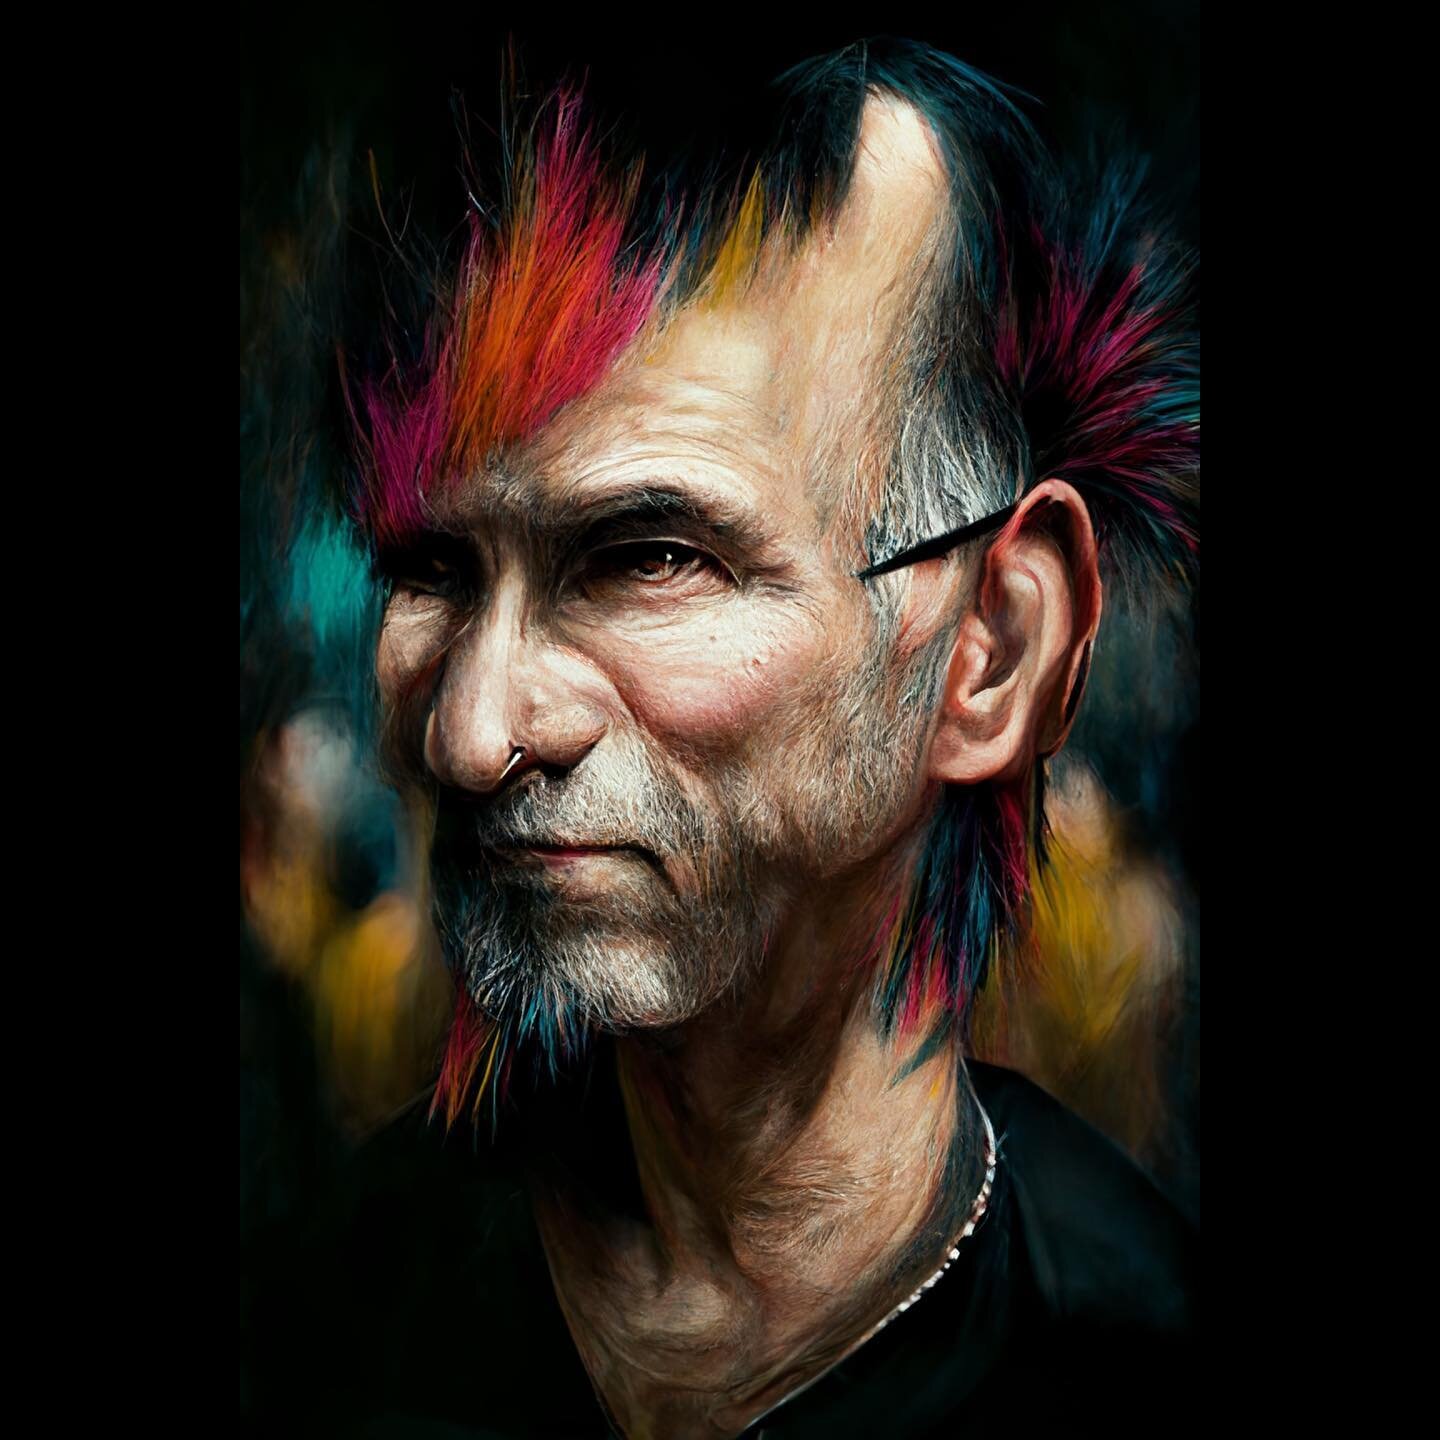 Steve Jobs in another life

&mdash;
#midjourney #midjourneyart #midjourneyai #digitalart #stevejobs